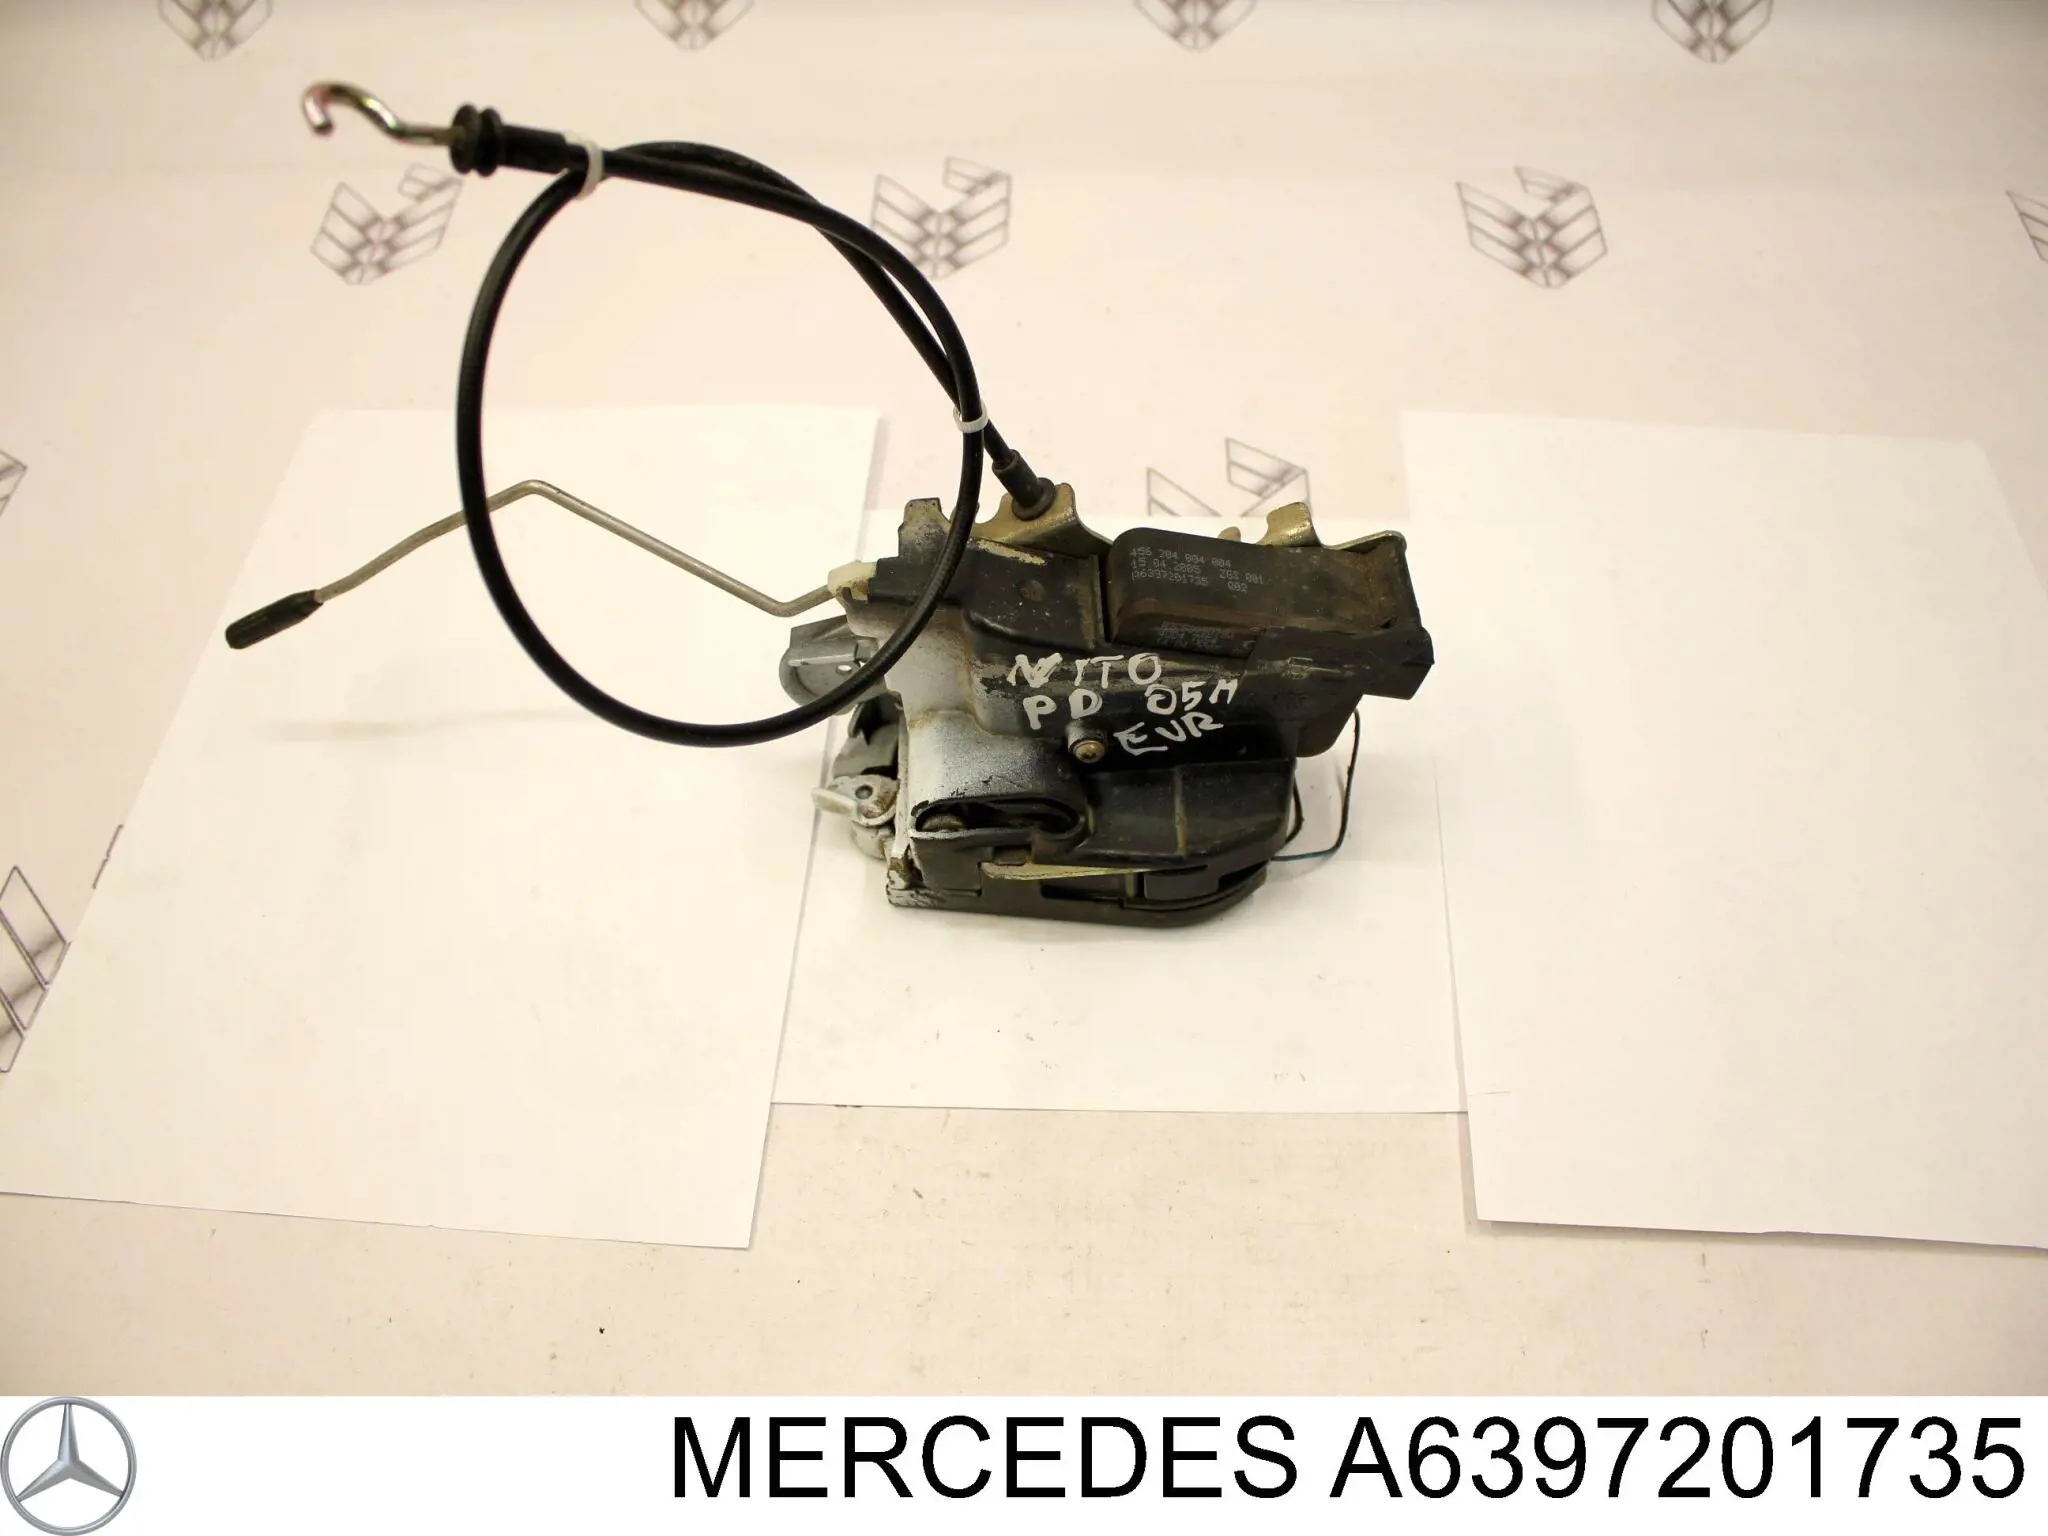 A6397201735 Mercedes cerradura de puerta delantera derecha